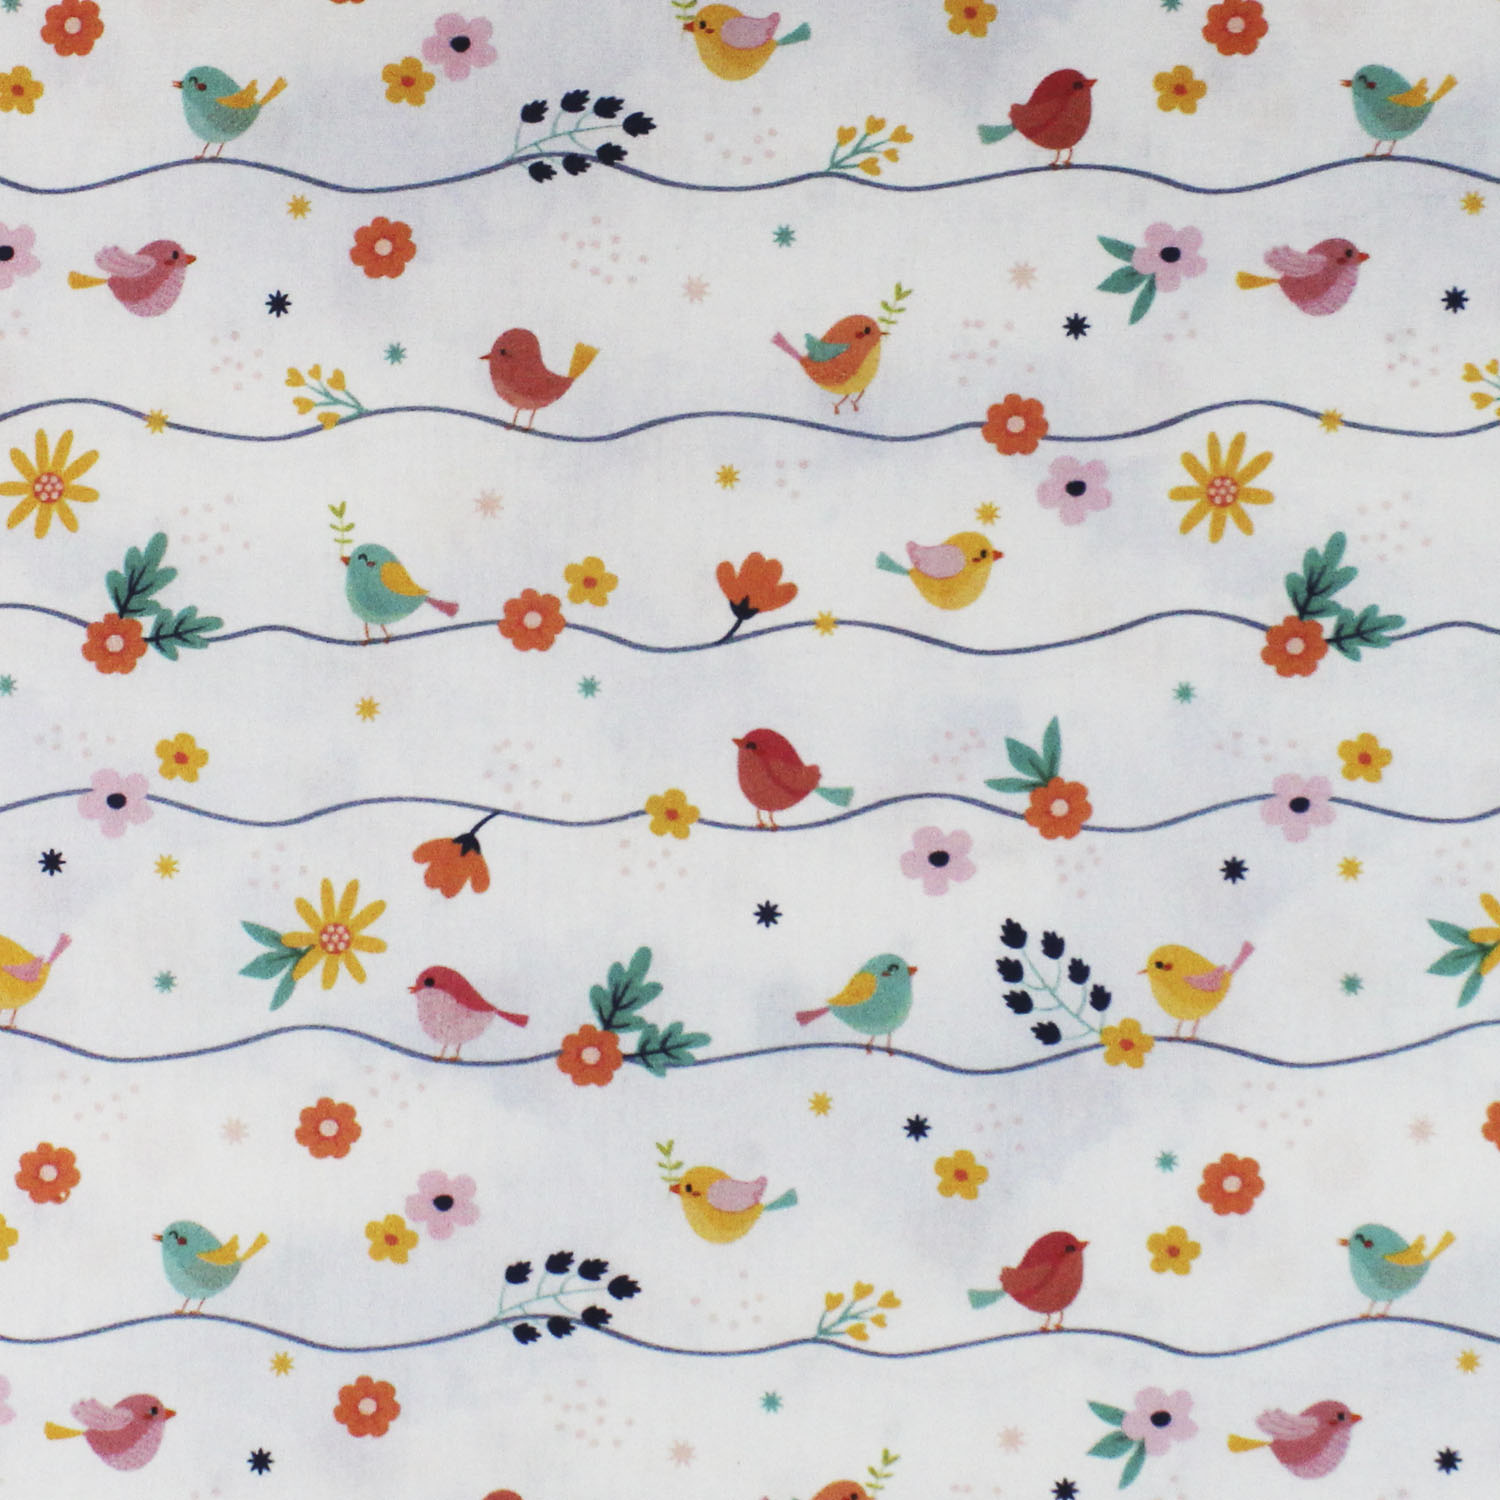 tecido-tricoline-flores-e-passaros-fundo-branco-della-aviamentos-10918